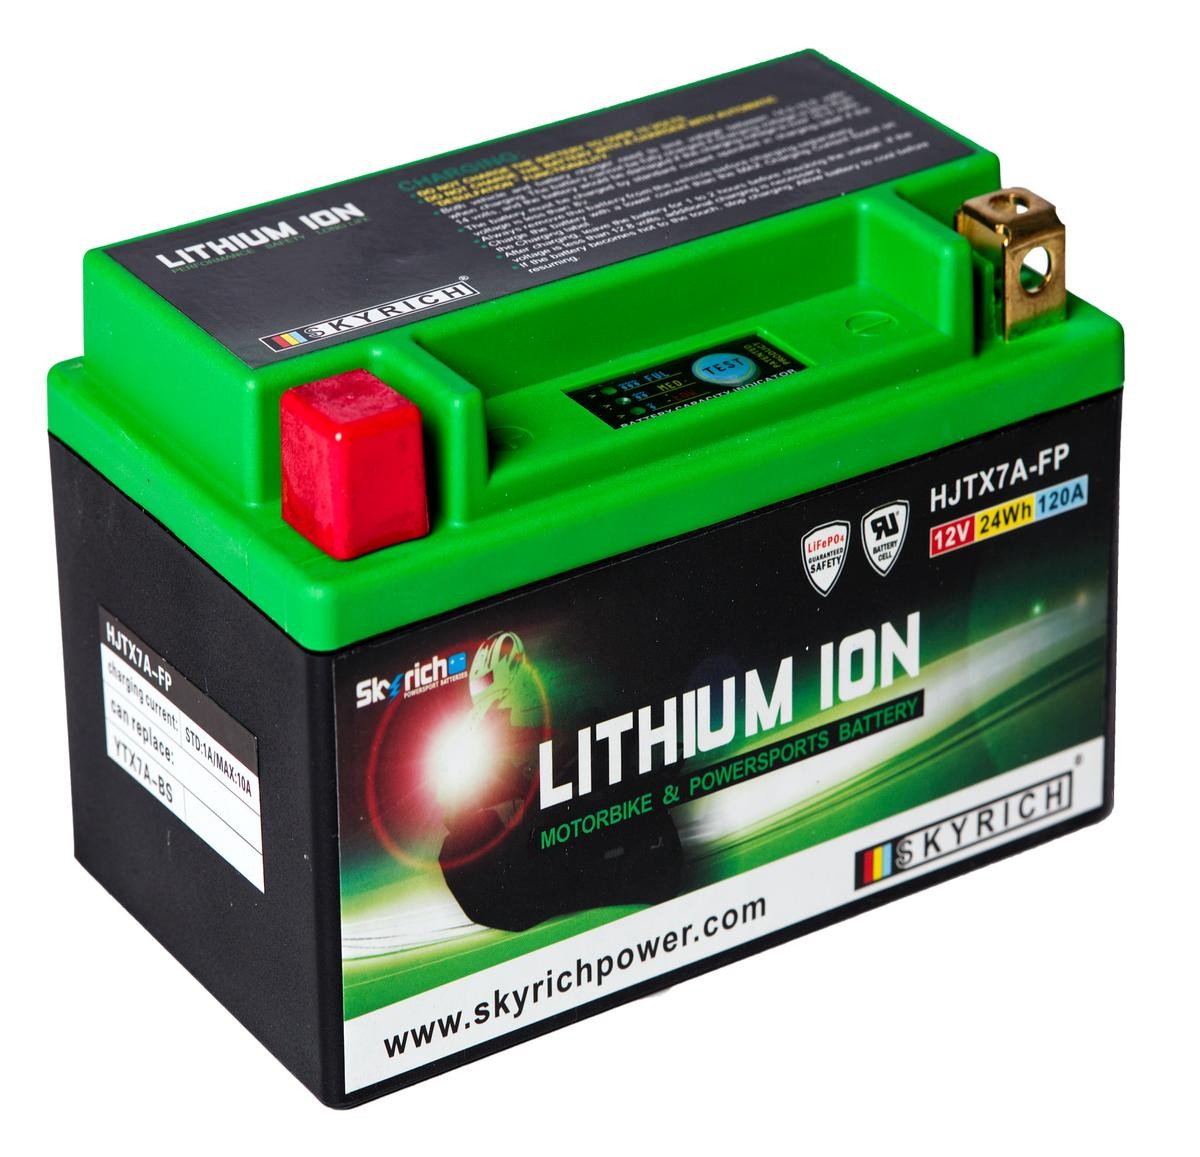 BAOTIAN 7B Batterie 12V 2Ah 120A N Li-Ionen-Batterie SKYRICH LITHIUM ION HJTX7A-FP